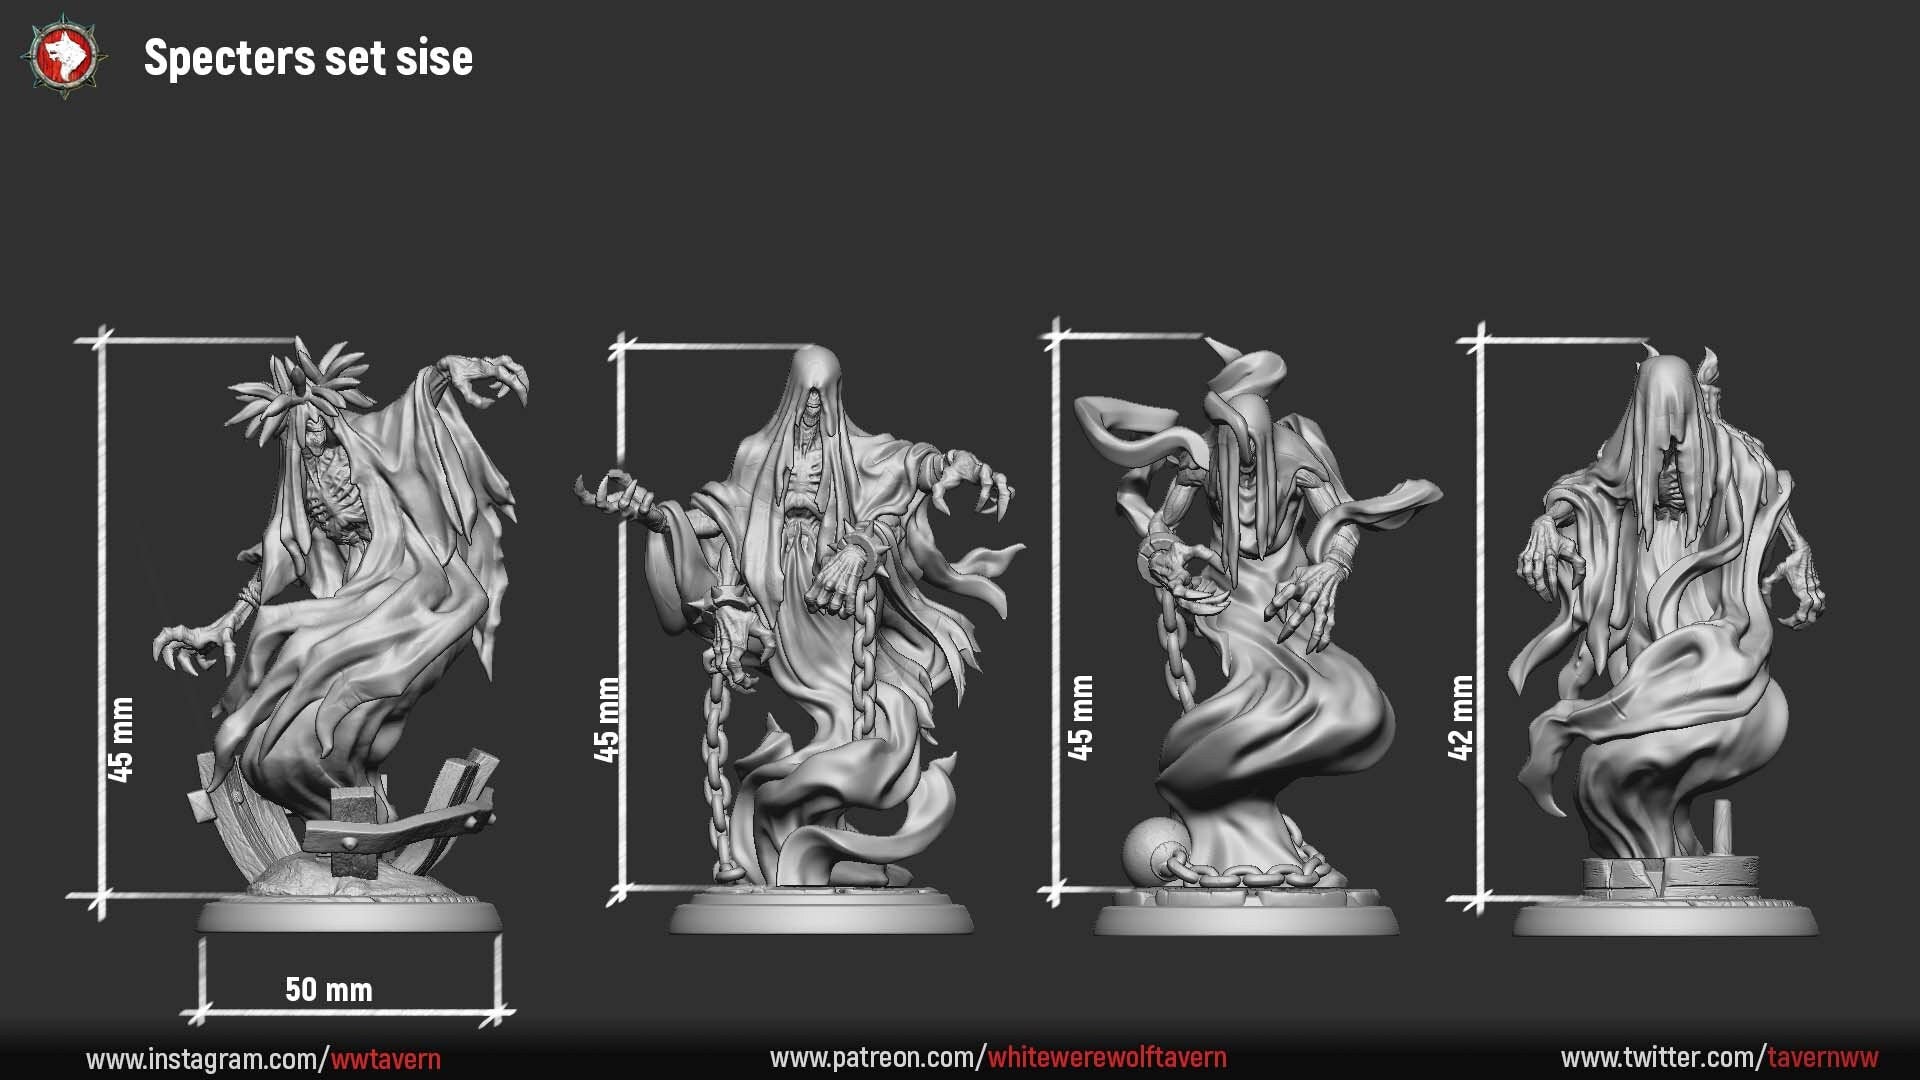 Specters | Resin 3D Printed Miniature | White Werewolf Tavern | RPG | D&D | DnD